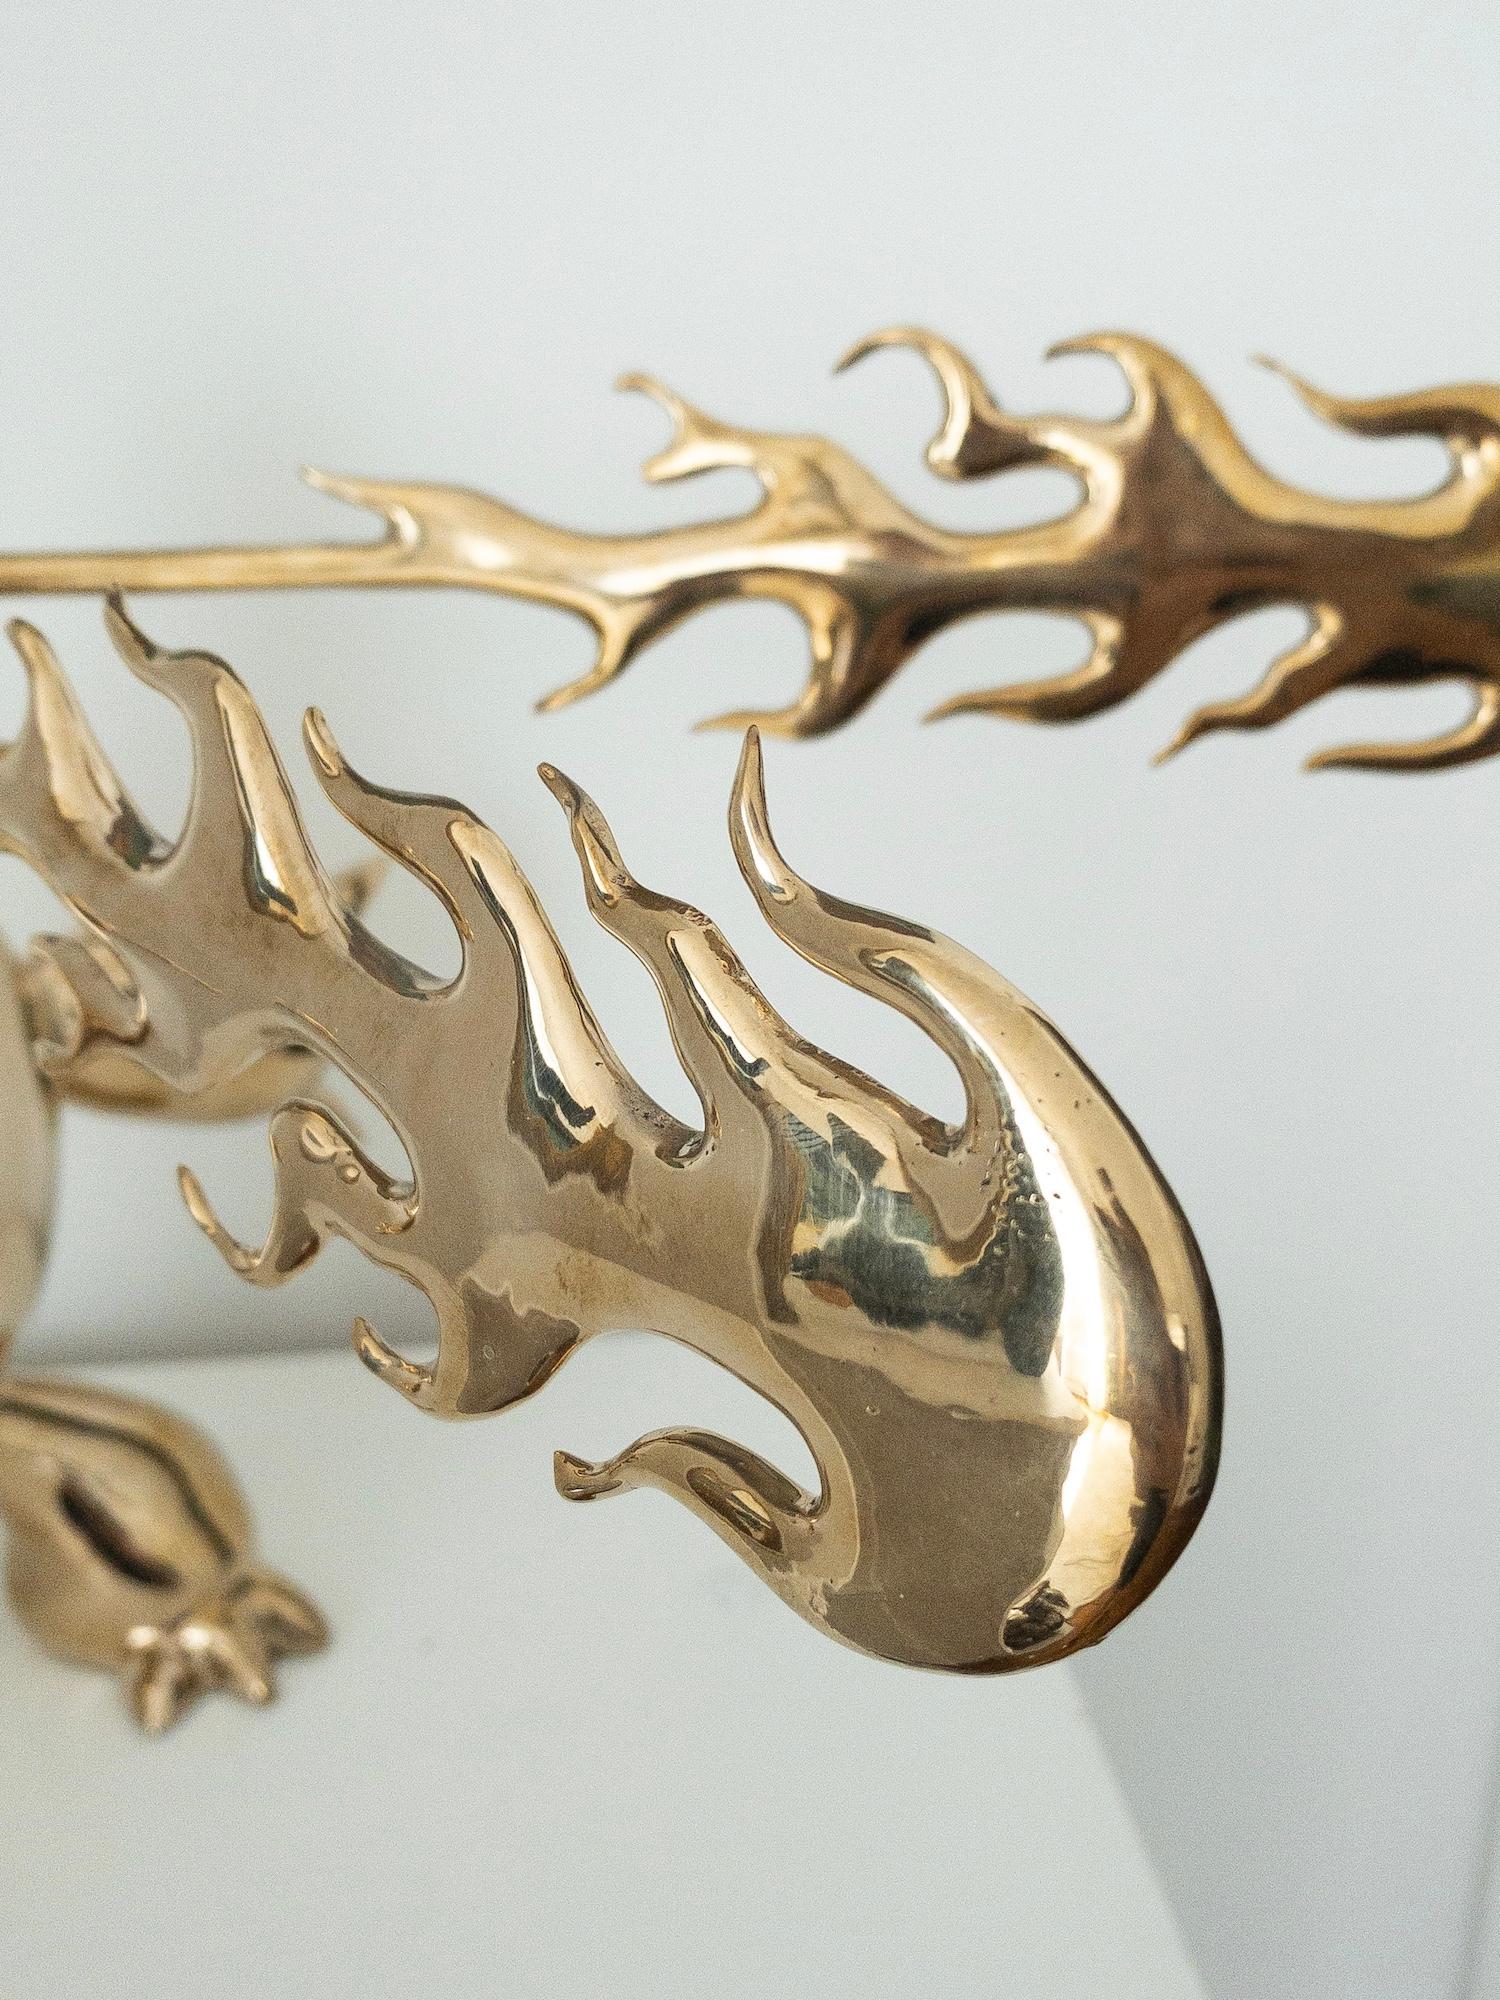 Furious Demon by Marcelo Martin Burgos - Polished bronze sculpture, golden For Sale 9